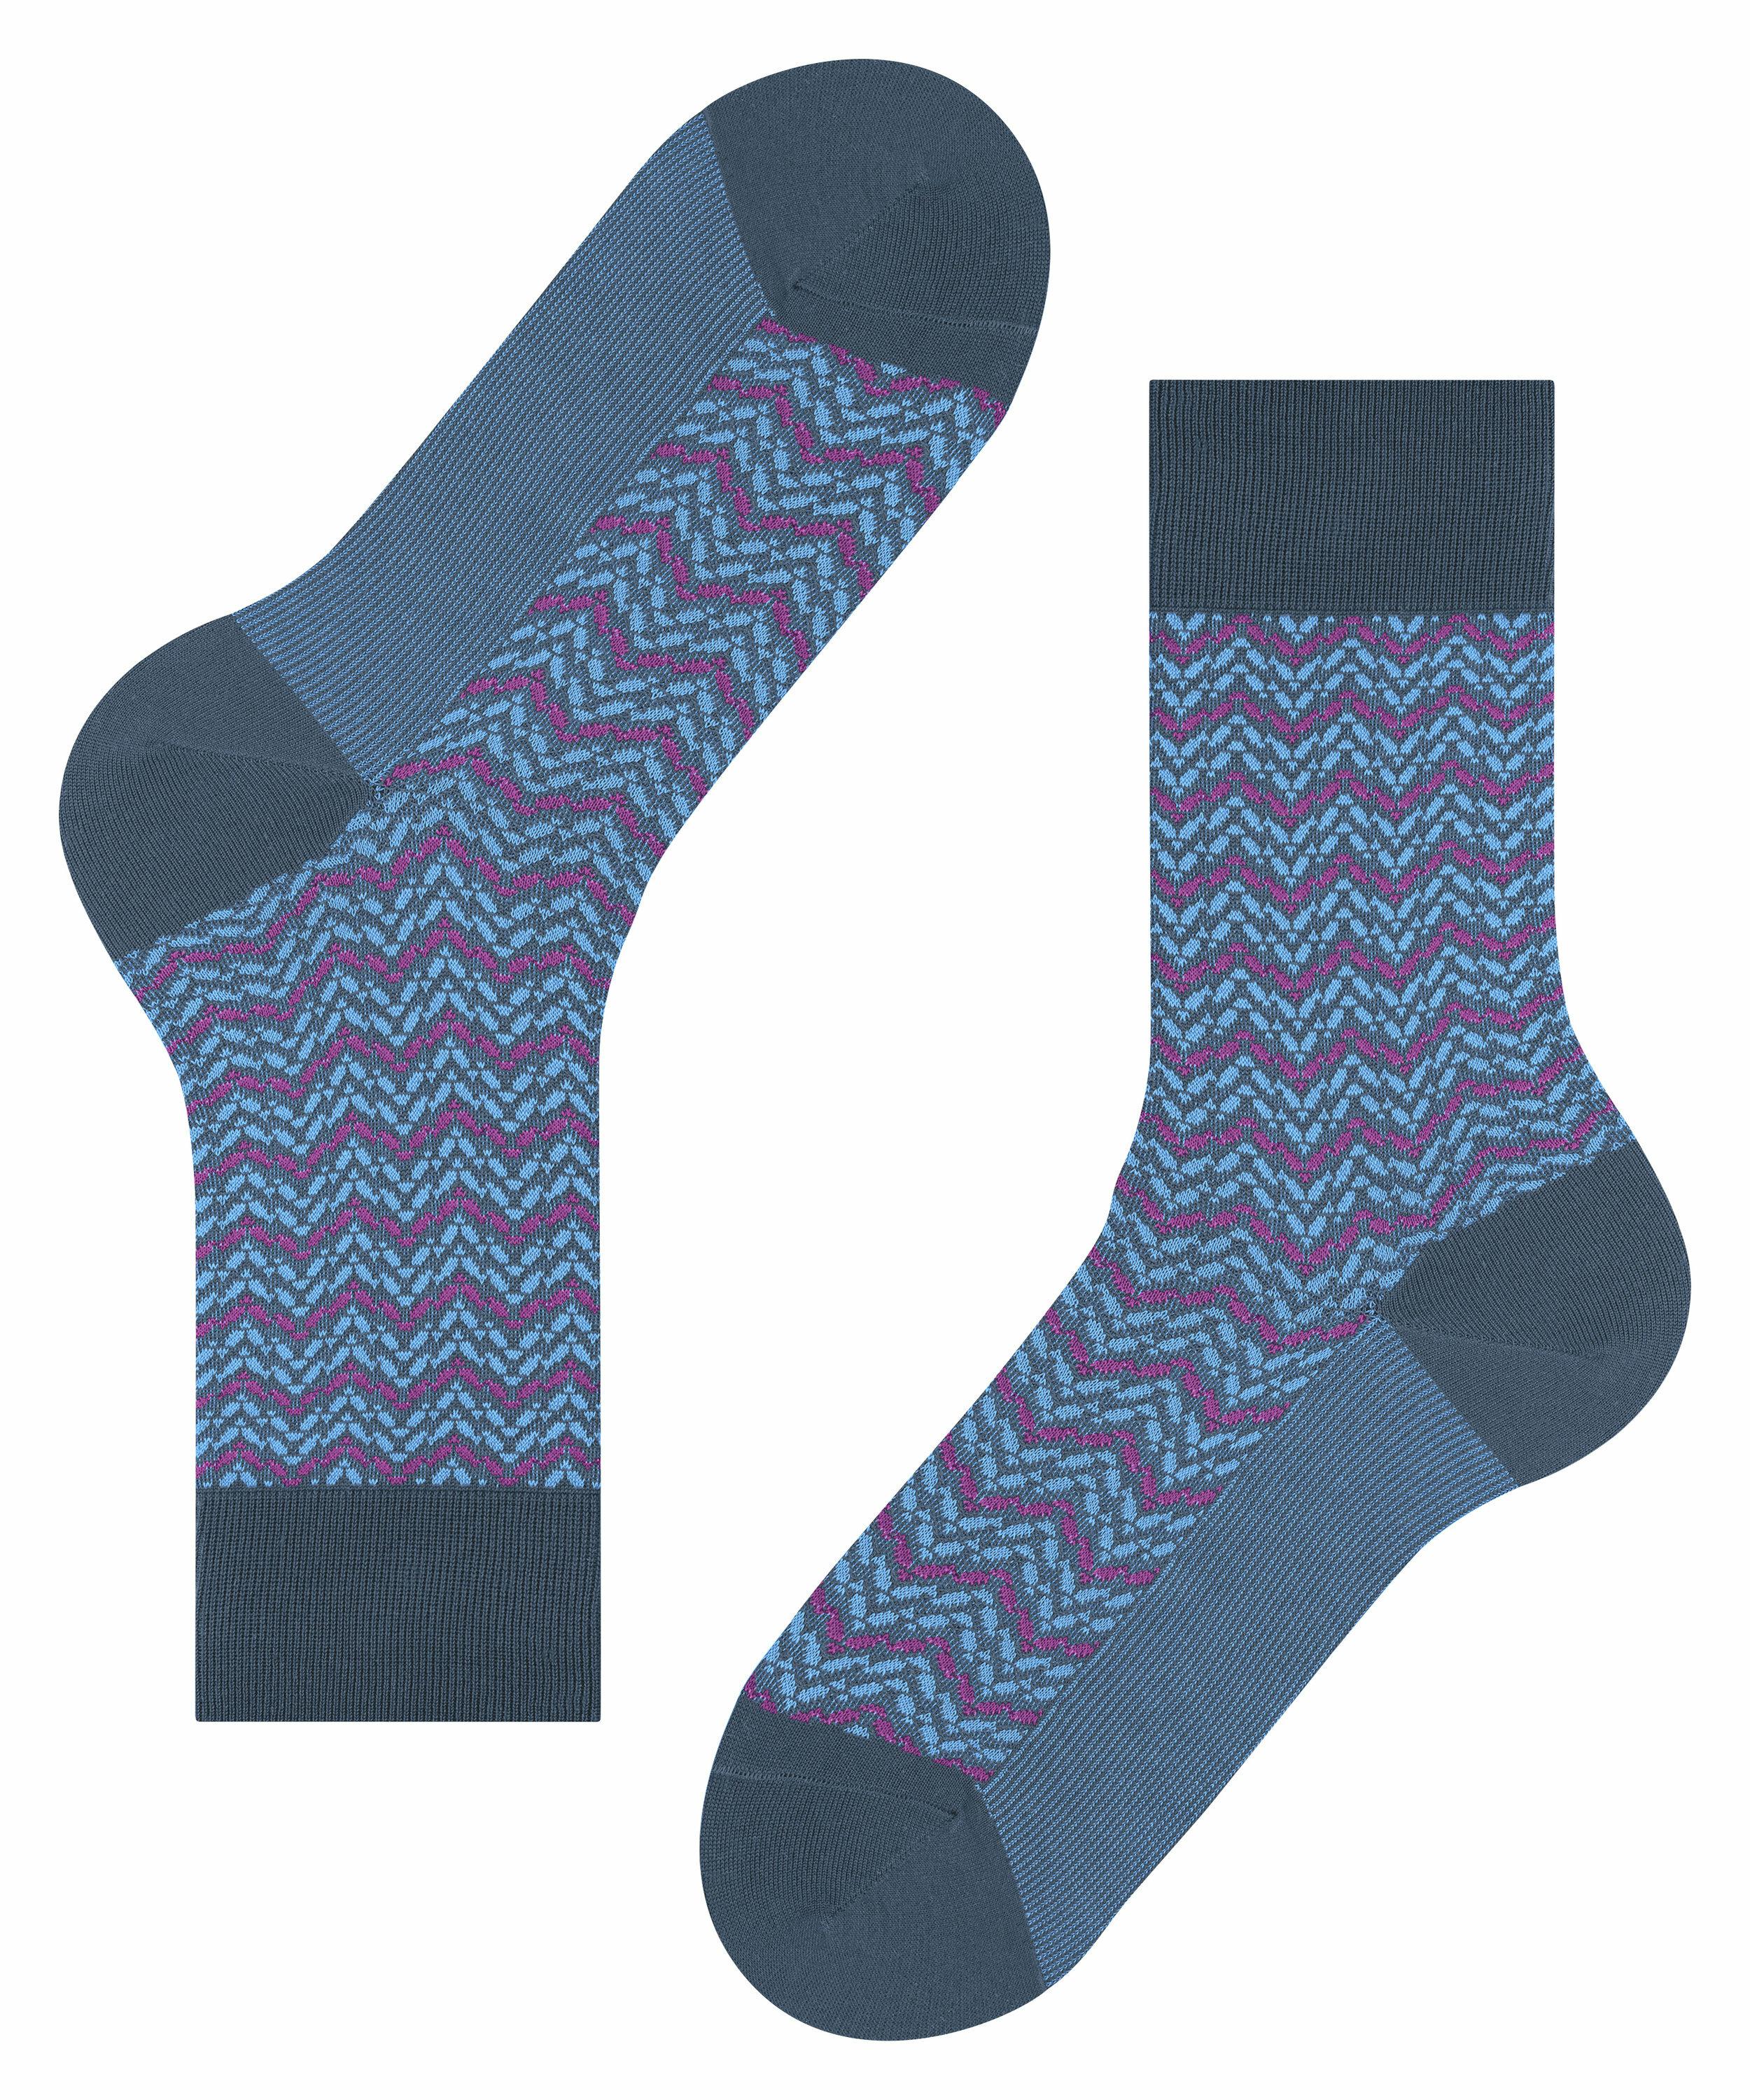 FALKE Colour Waves Herren Socken, 45-46, Blau, AnderesMuster, Baumwolle, 12 günstig online kaufen